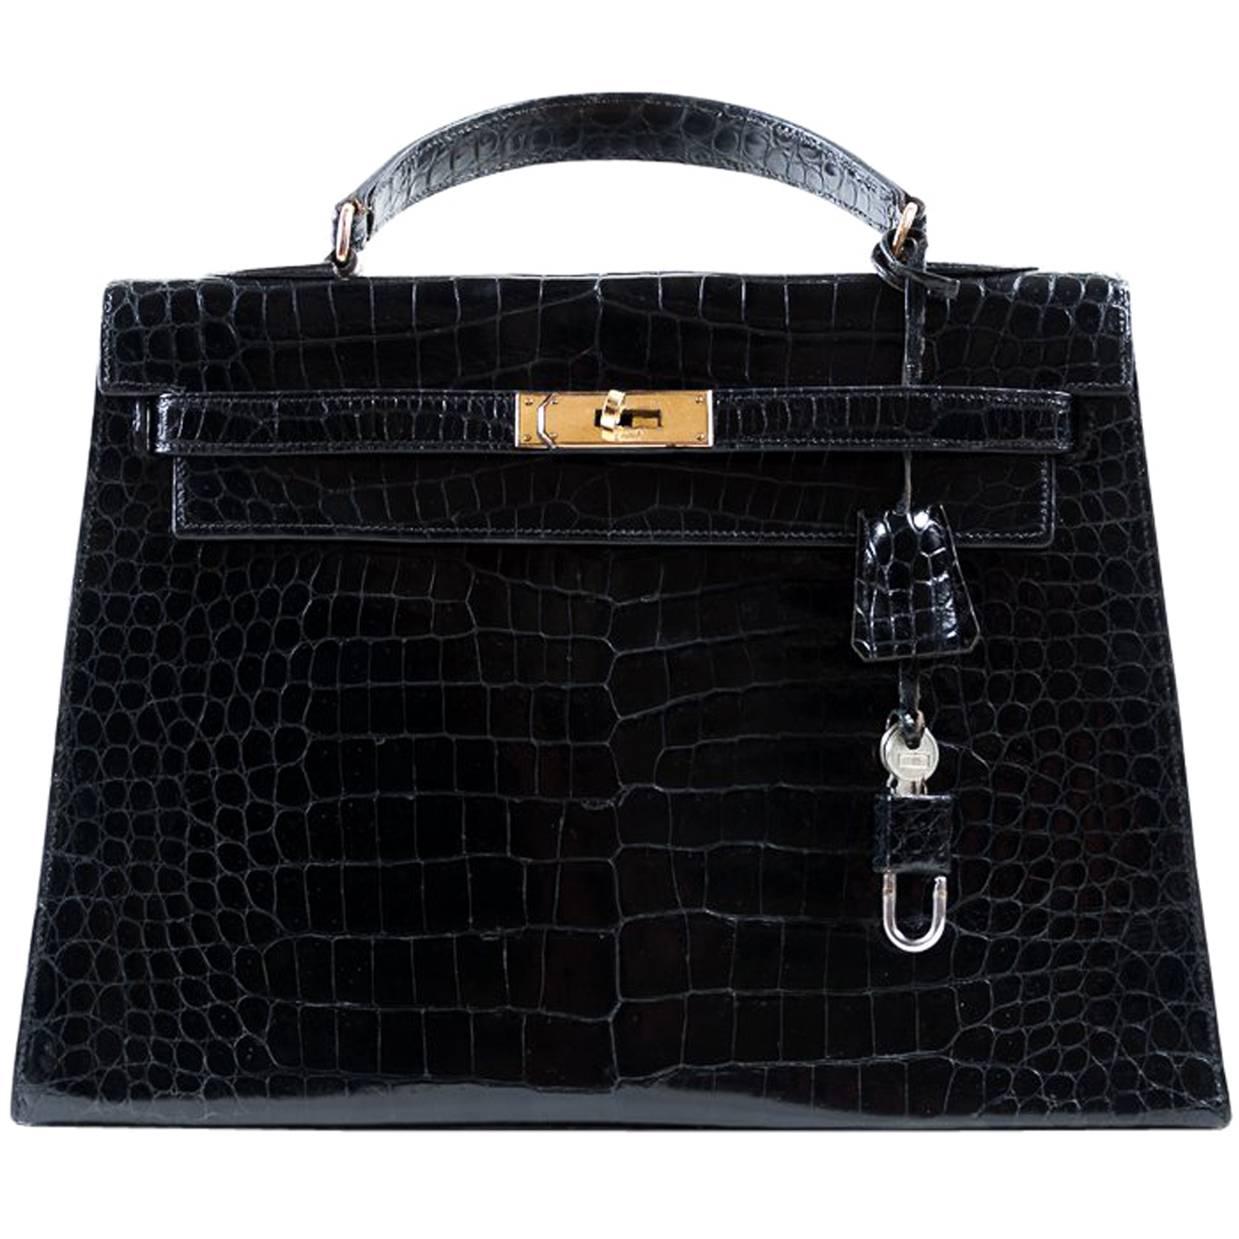 Hermes Kelly 32 Vintage Black Crocodile Bag Spa Hermes Invoice From 2017 For Sale